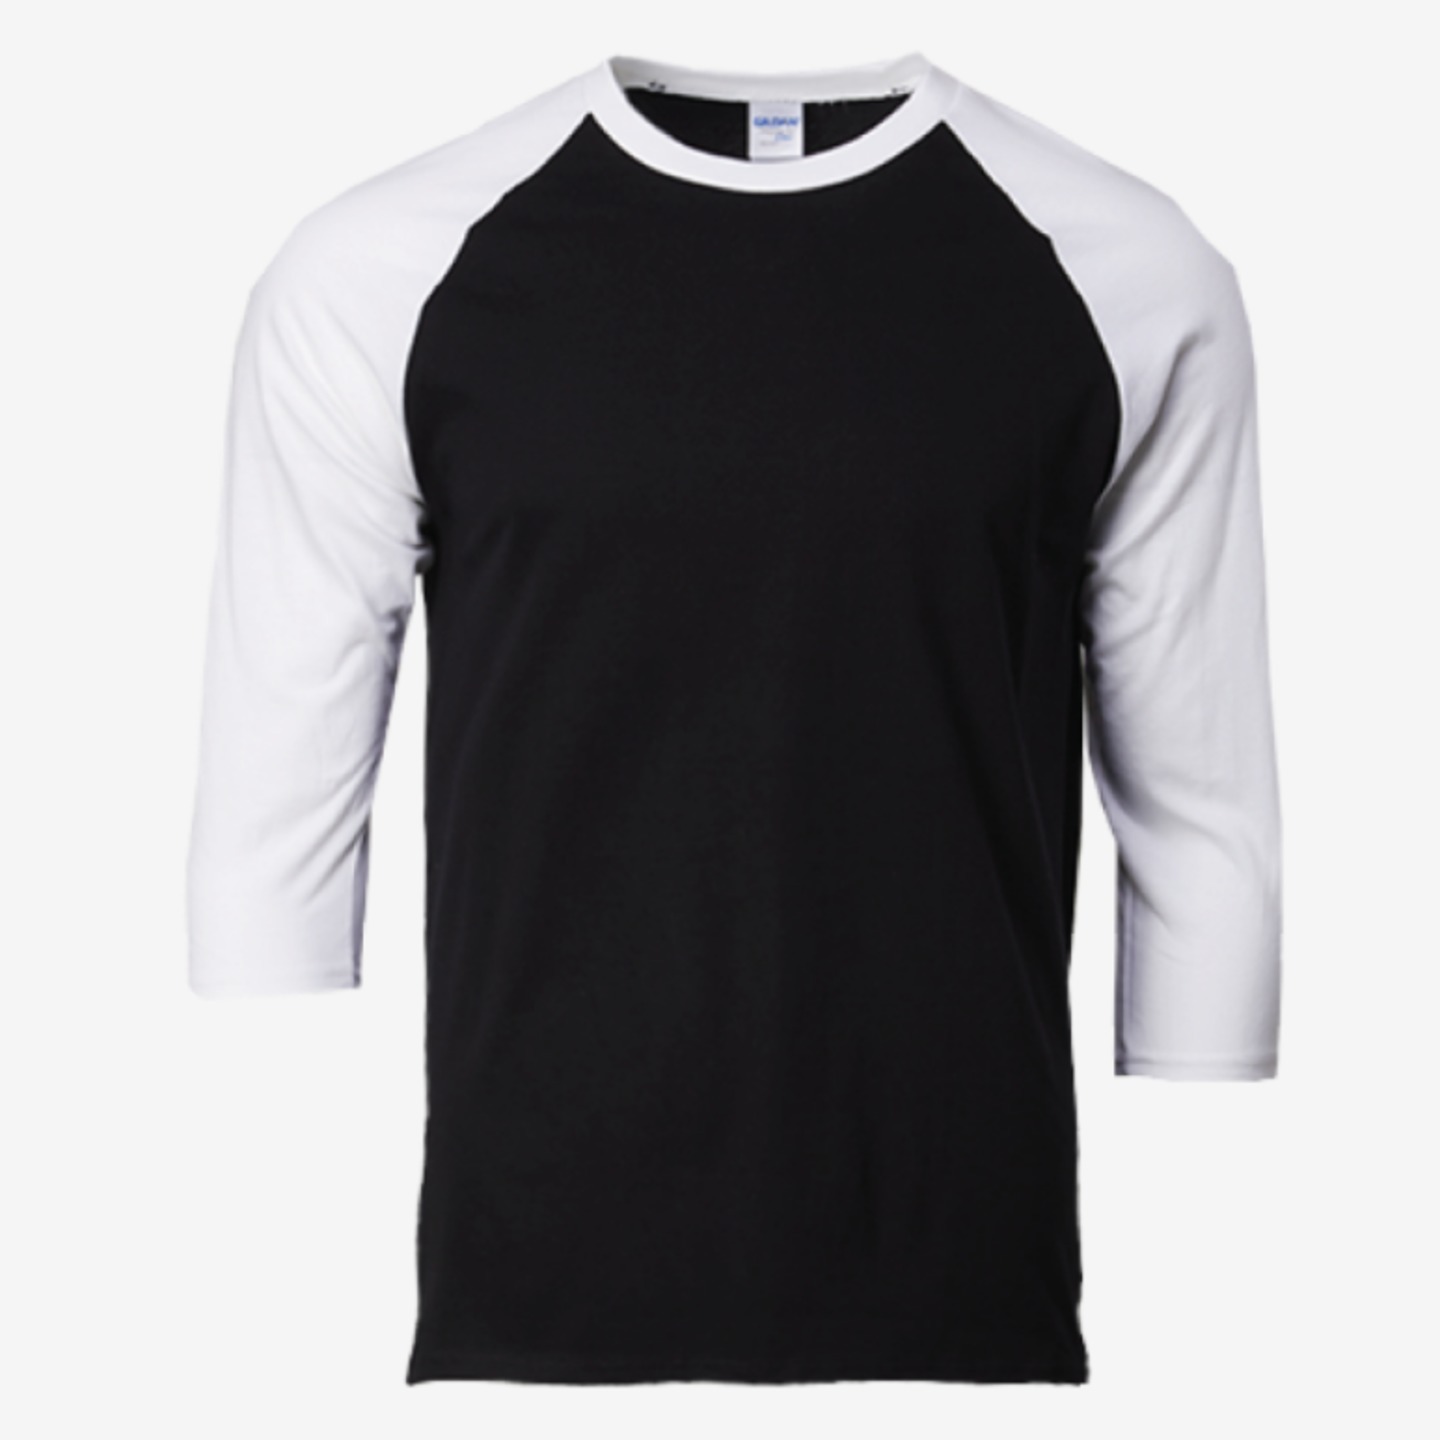 Gildan Adult 34 Sleeve Raglan T-shirt